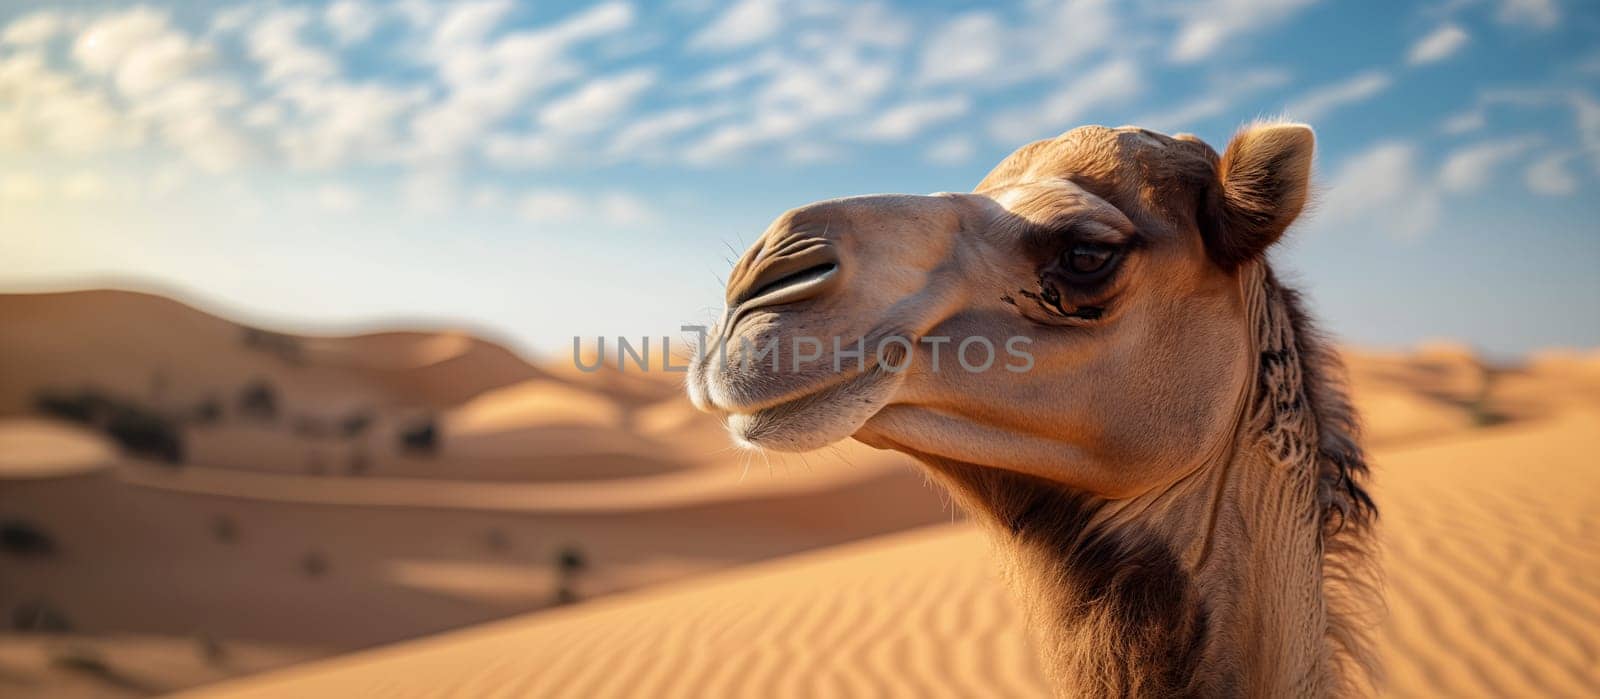 Close-Up Camel Portrait in a Desert Dunes Landscape at Sunset by chrisroll